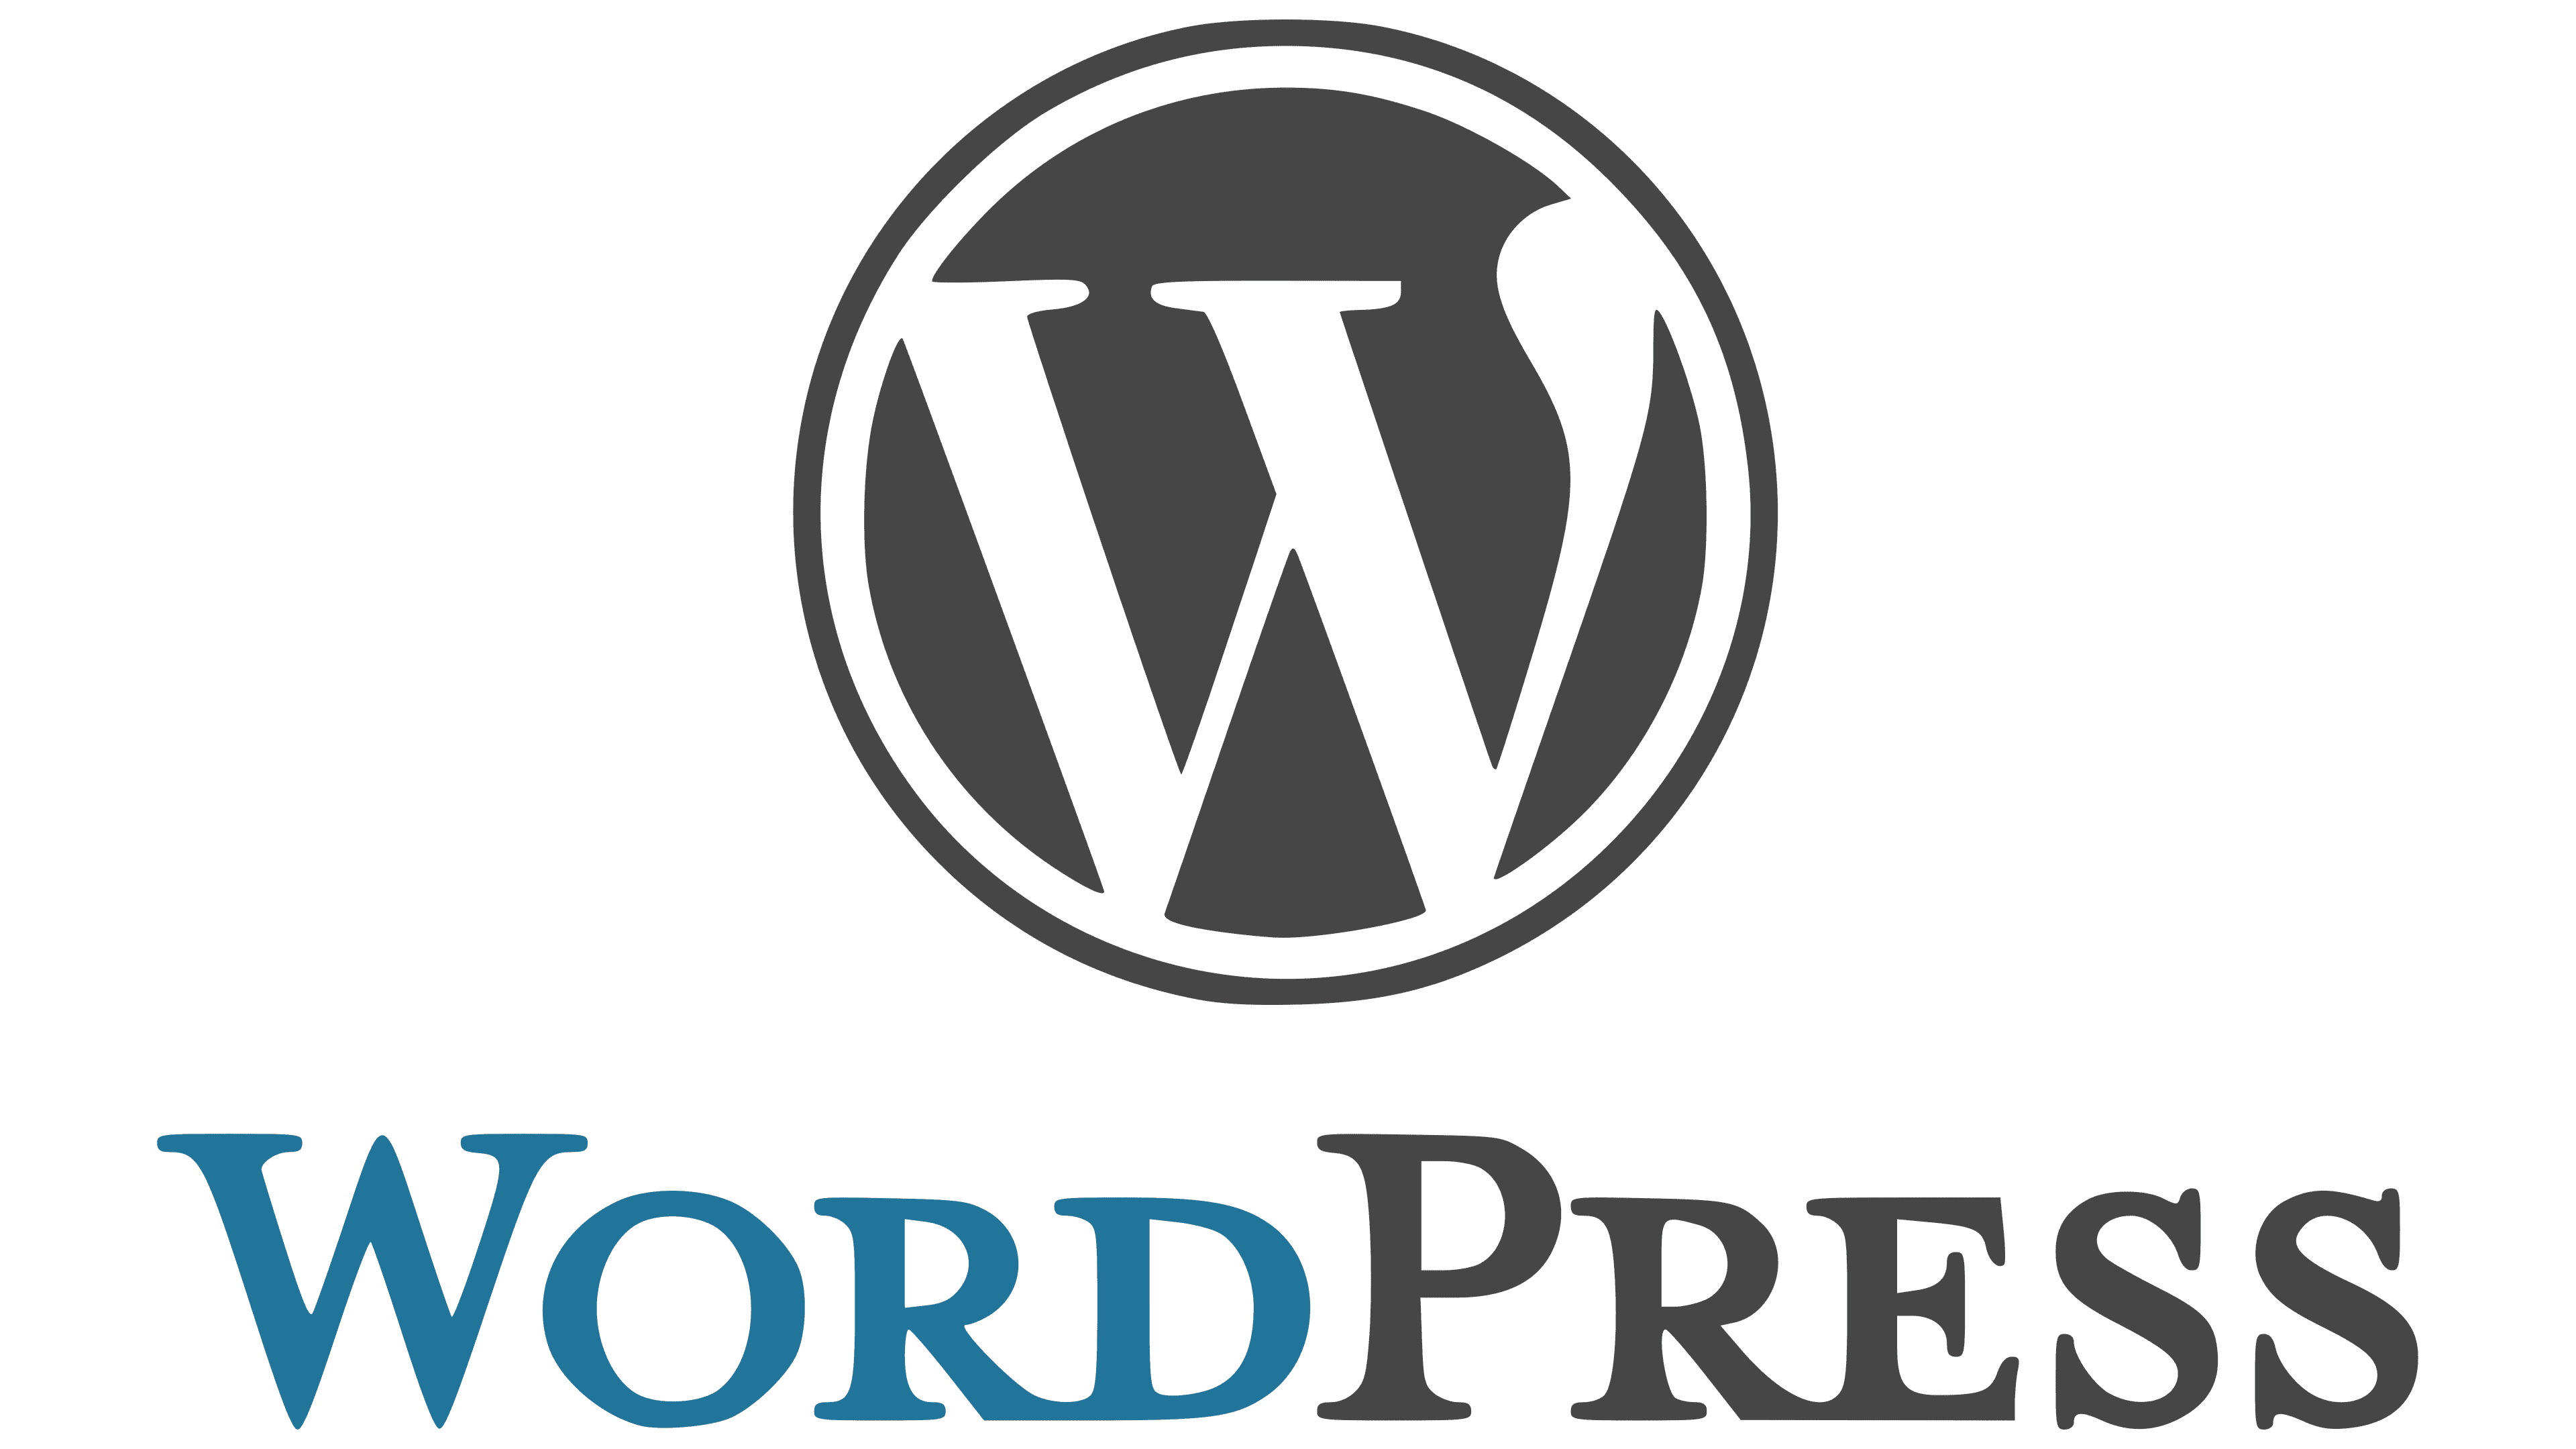 Website design packages for wordpress